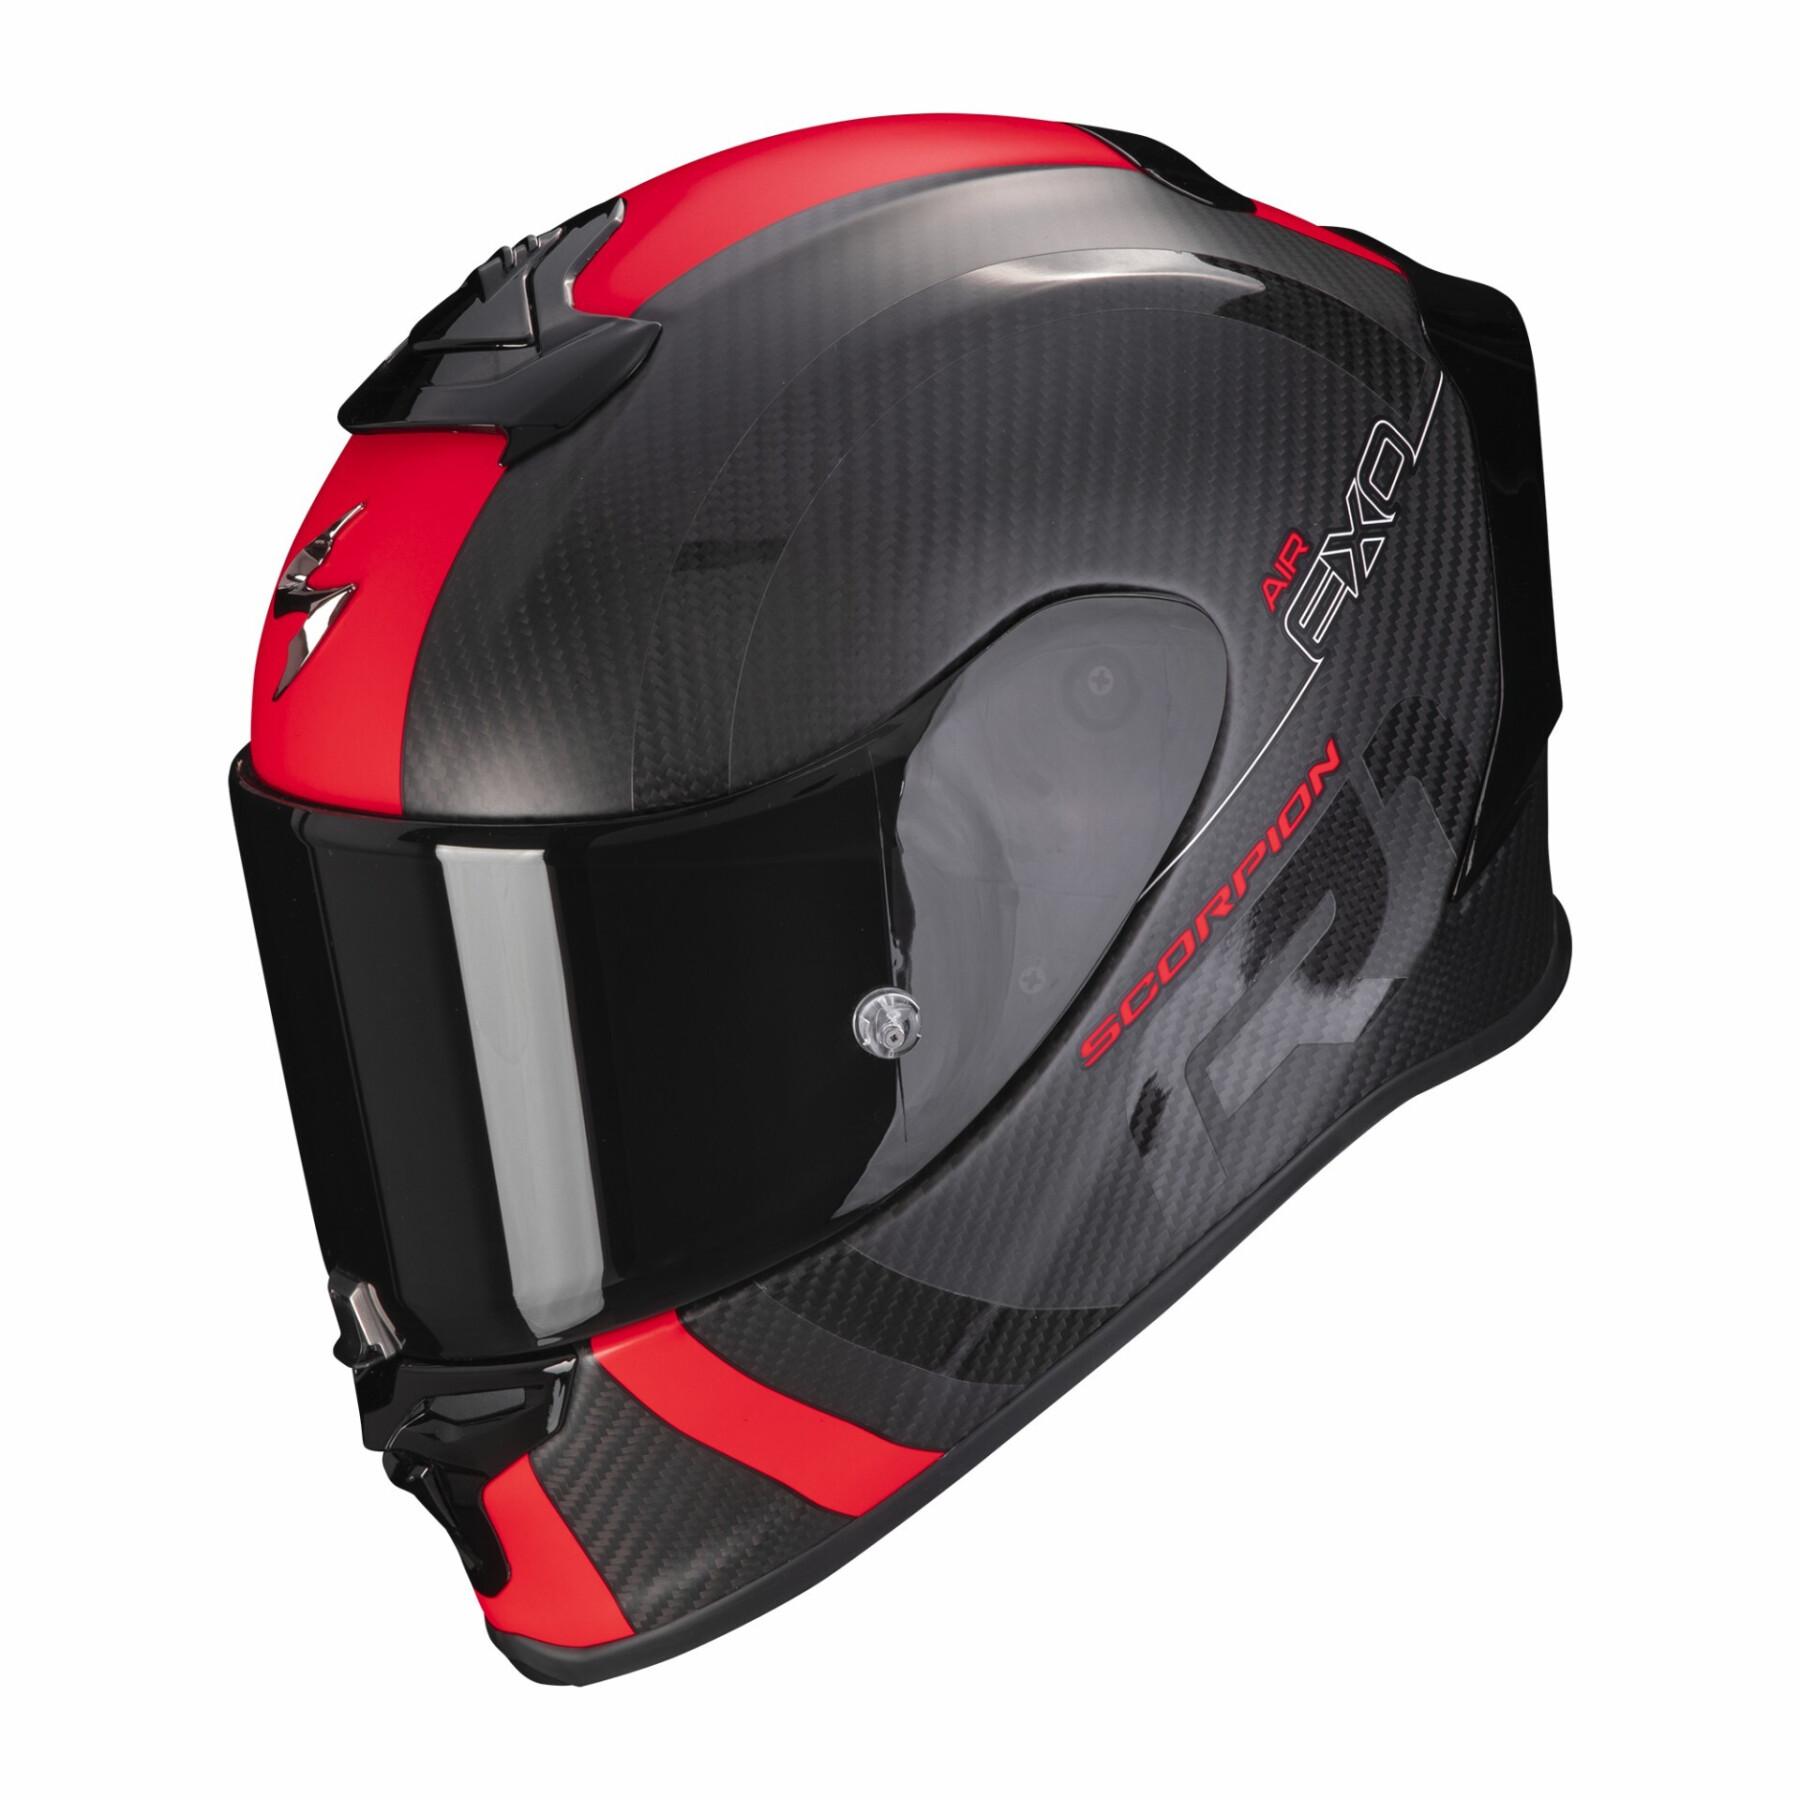 Full face motorcycle helmet Scorpion Exo-R1 Evo Carbon Air MG ECE 22-06